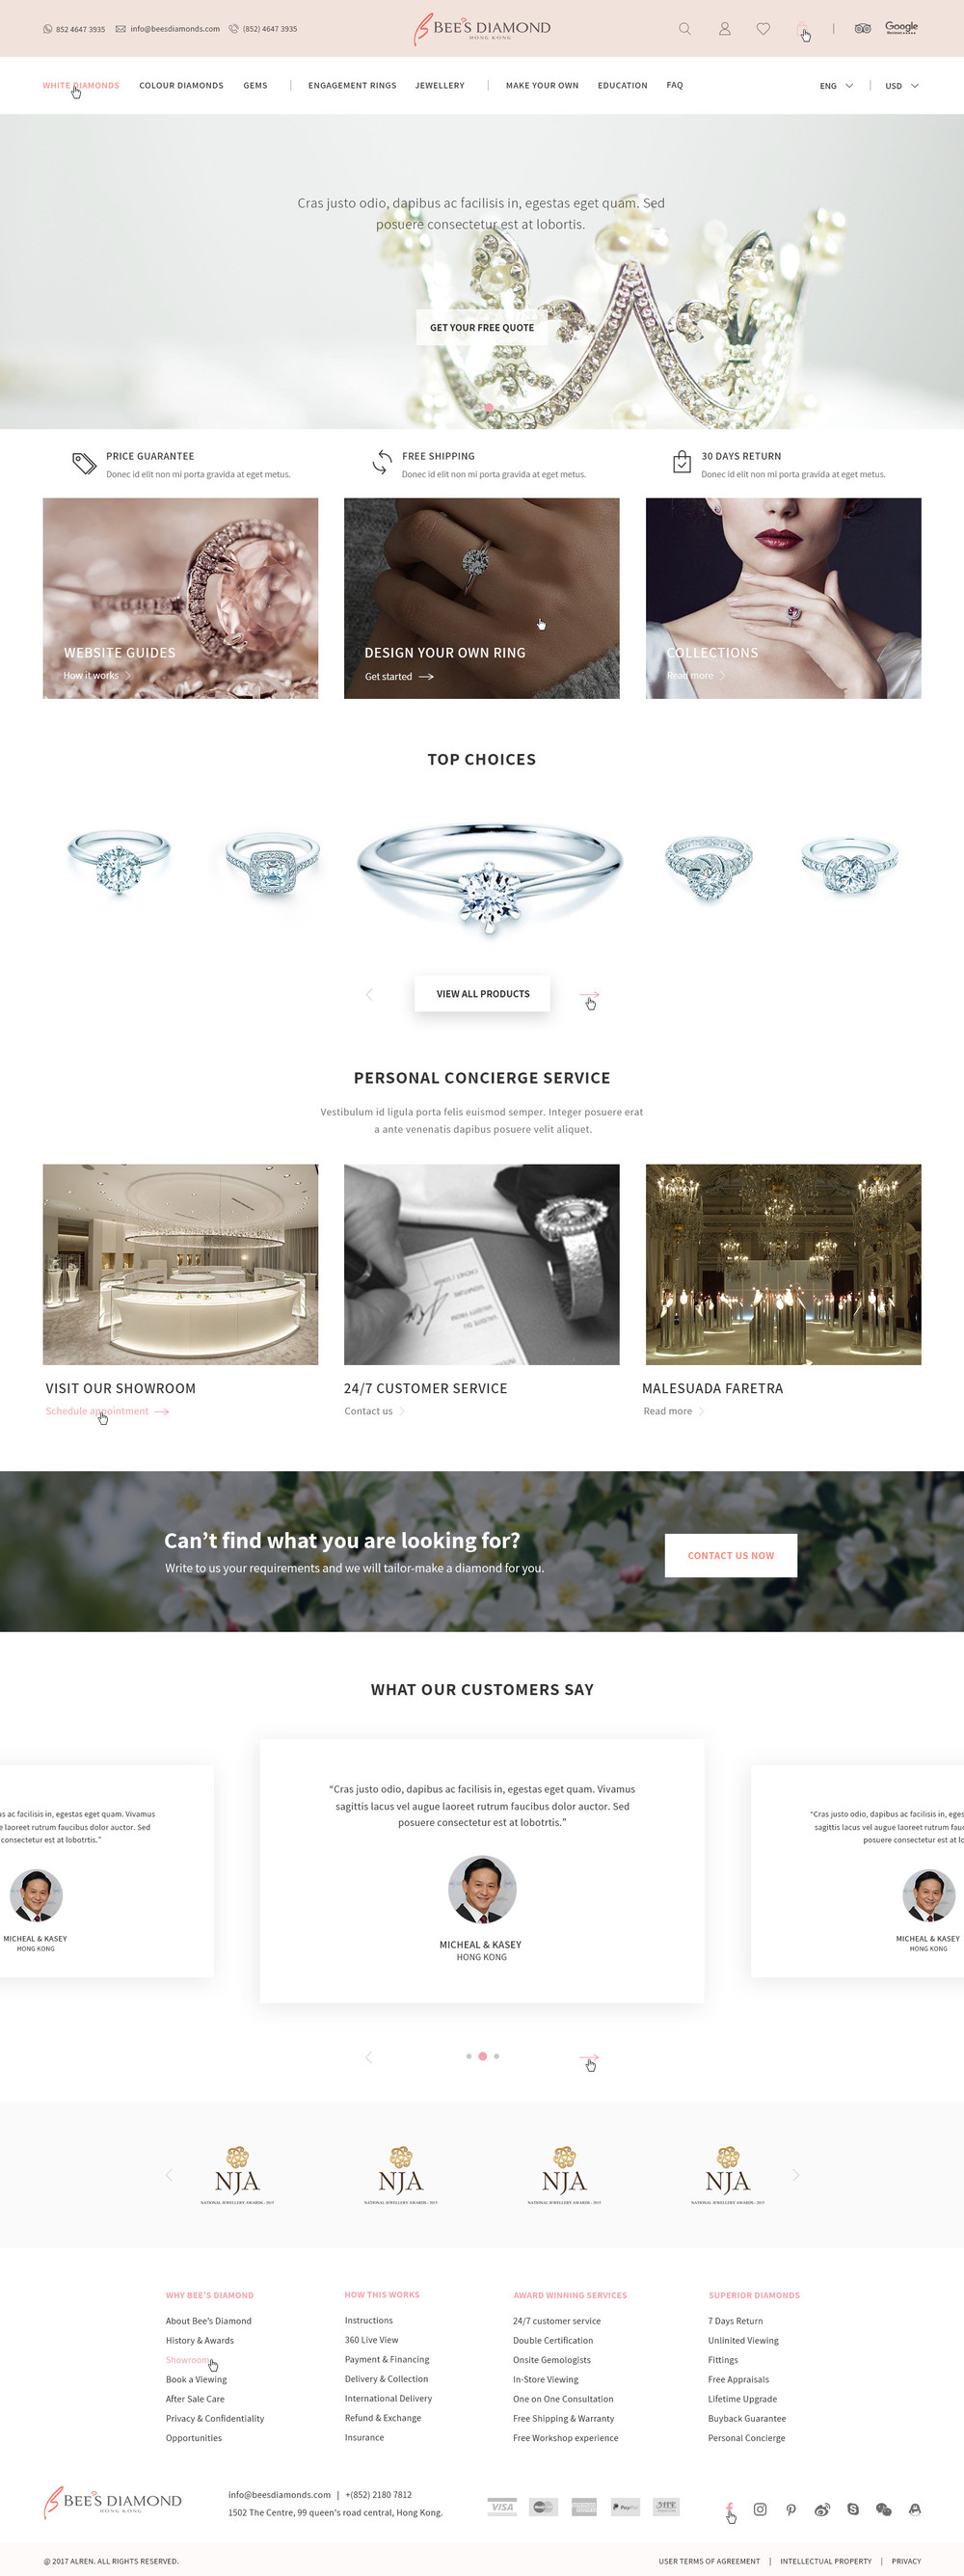 Bee's Diamonds Home page